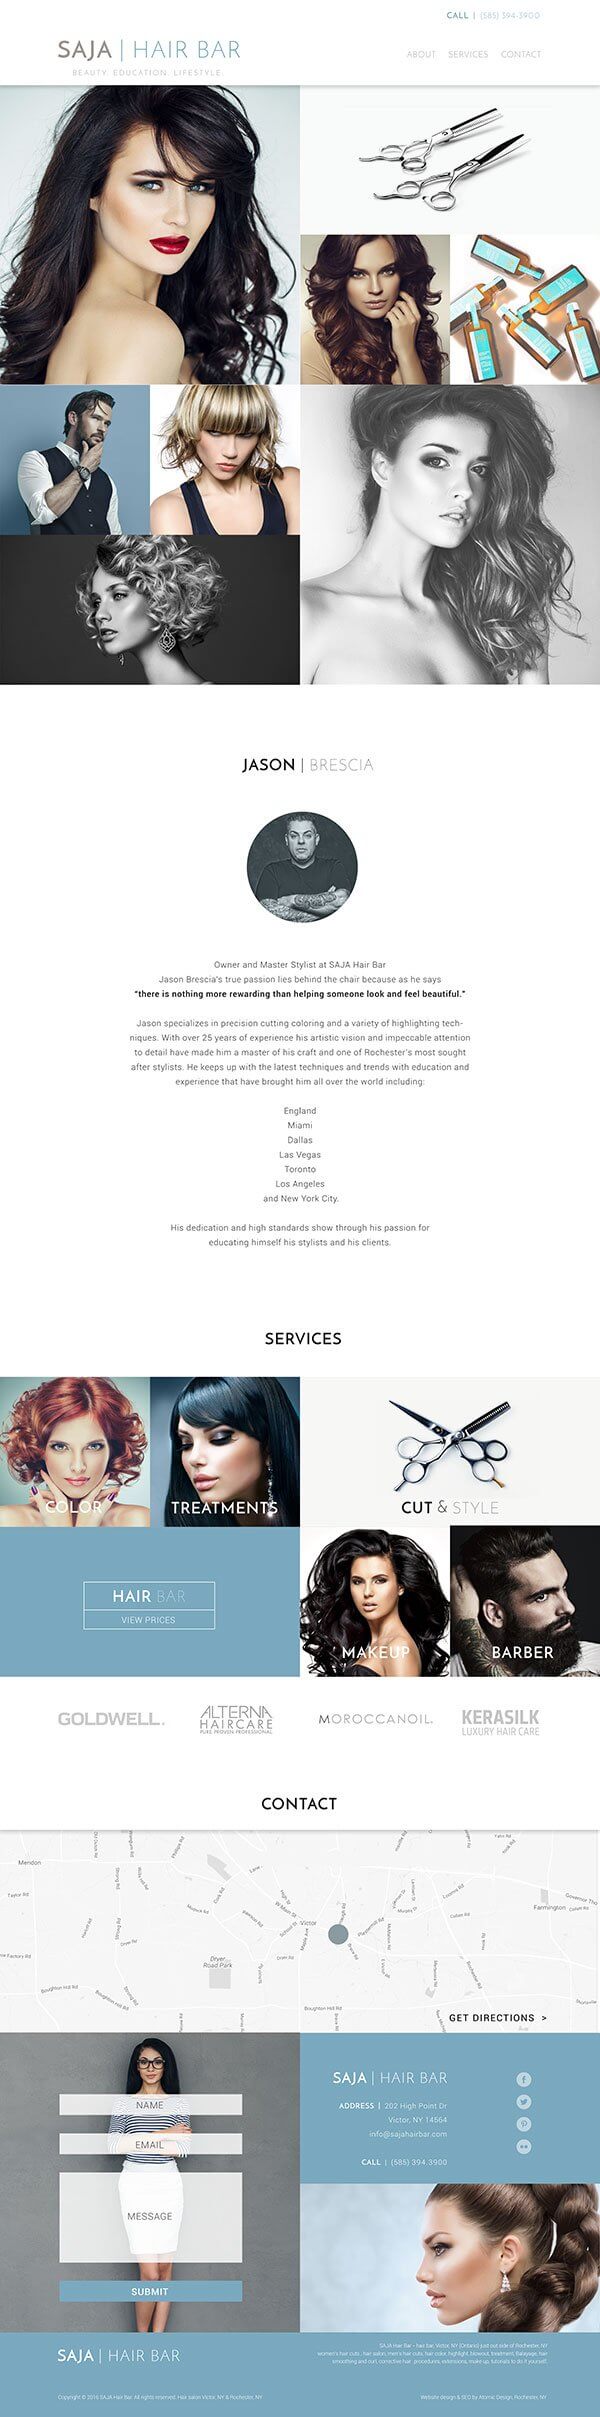 Portfolio s hair salon website sample